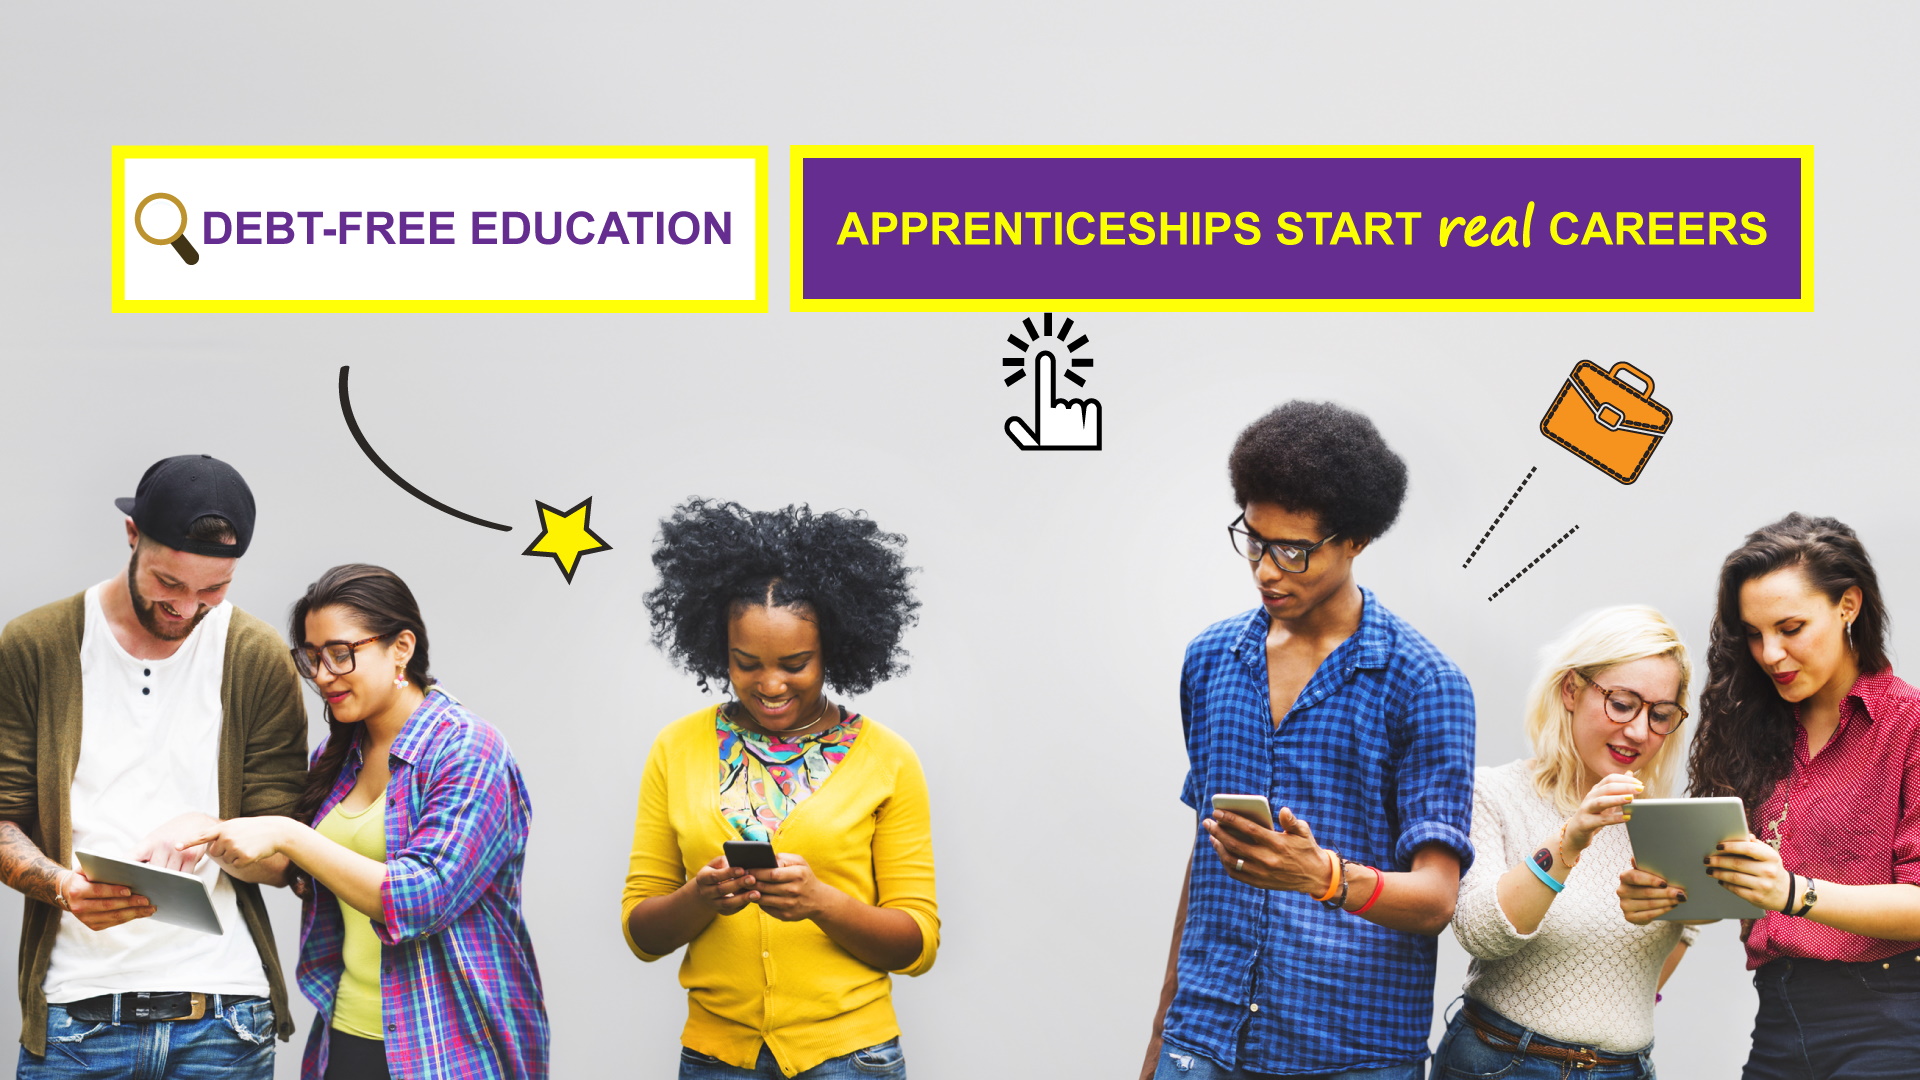 Debt free education. Apprenticeships start real careers